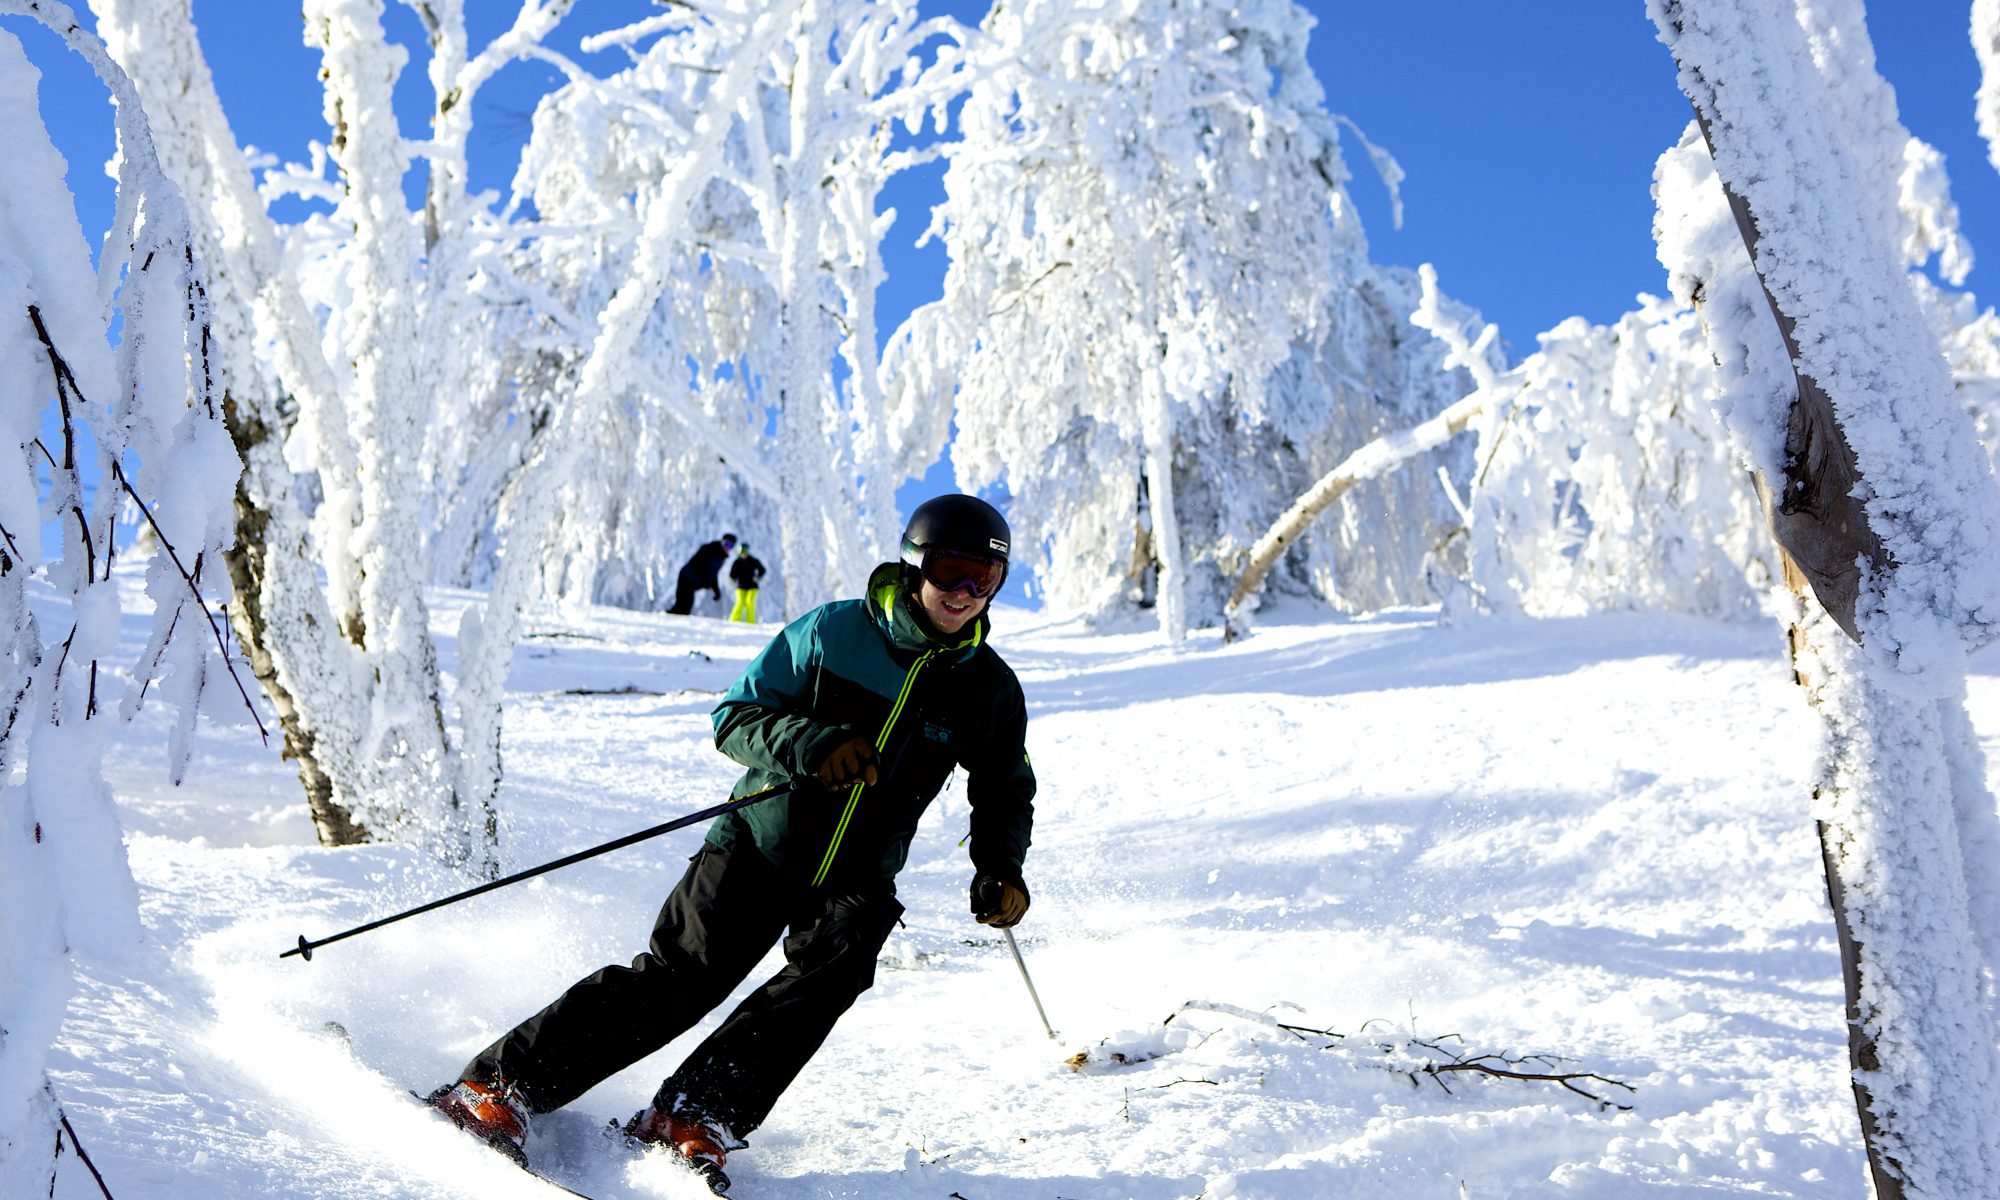 Okemo Resort picture. SkiVermont.com - Over 4 million skier visits for Vermont.